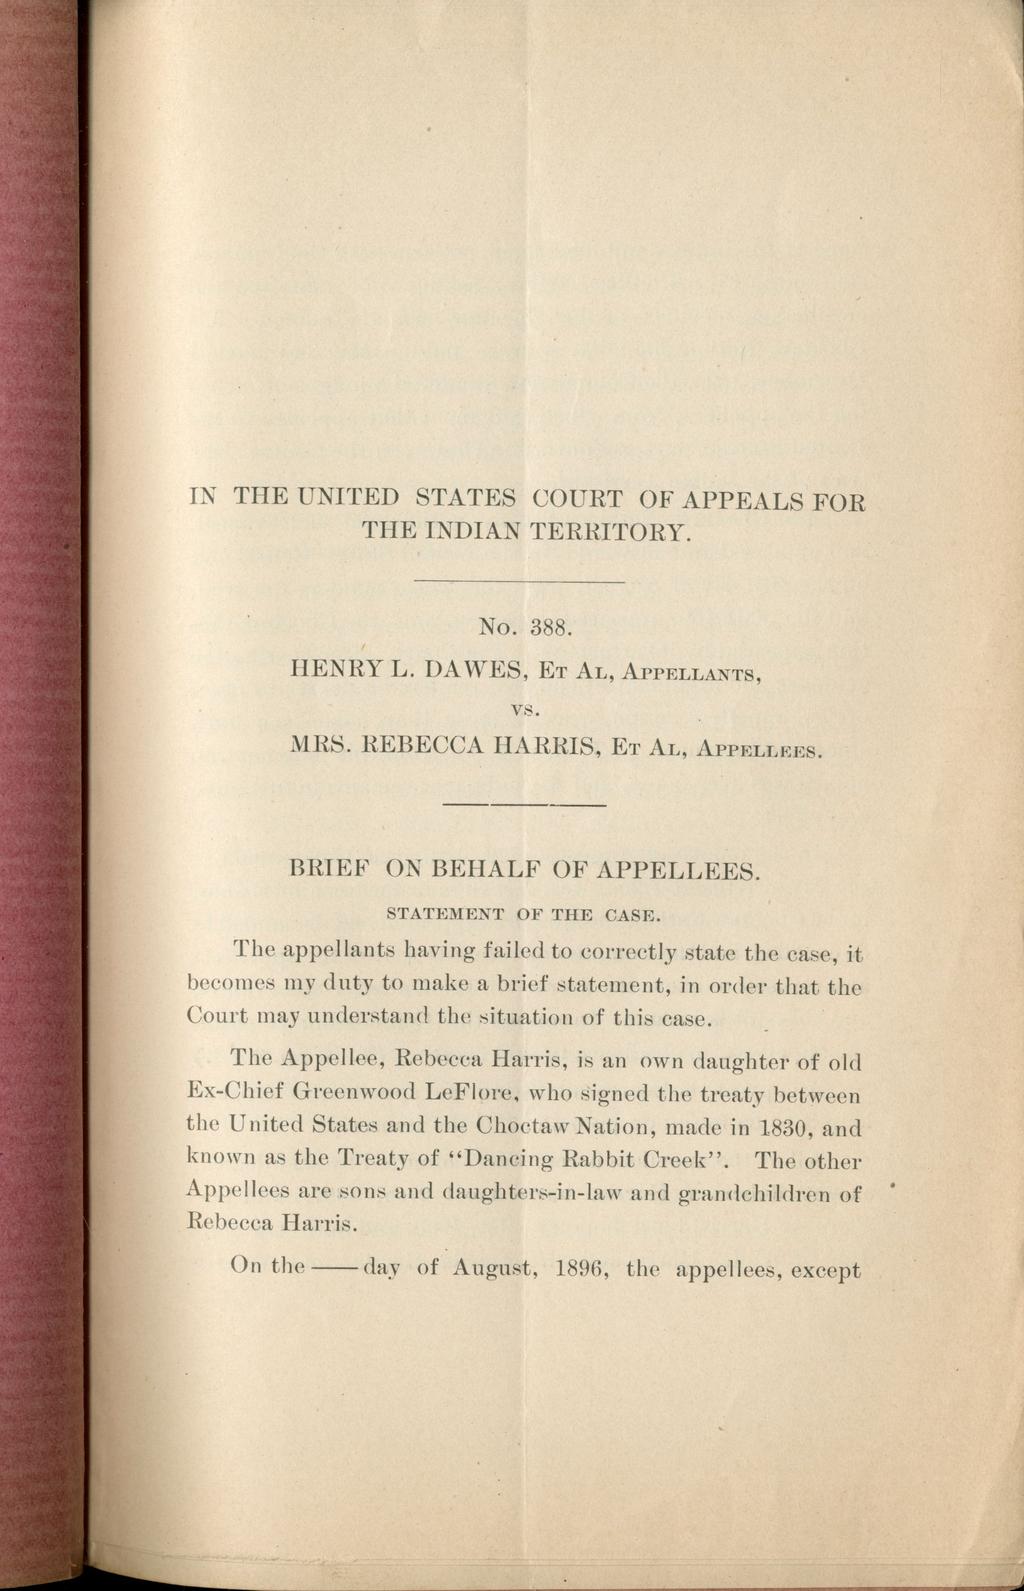 IN THE UNITED STATES COURT OF APPEALS FOR THE INDIAN TERRITORY. No. 388. HENRY L. DAWES, ET AL, APPELLANTS, vs. MRS. REBECCA HARRIS, ET AL, APPELLEES. BRIEF ON BEHALF OF APPELLEES.